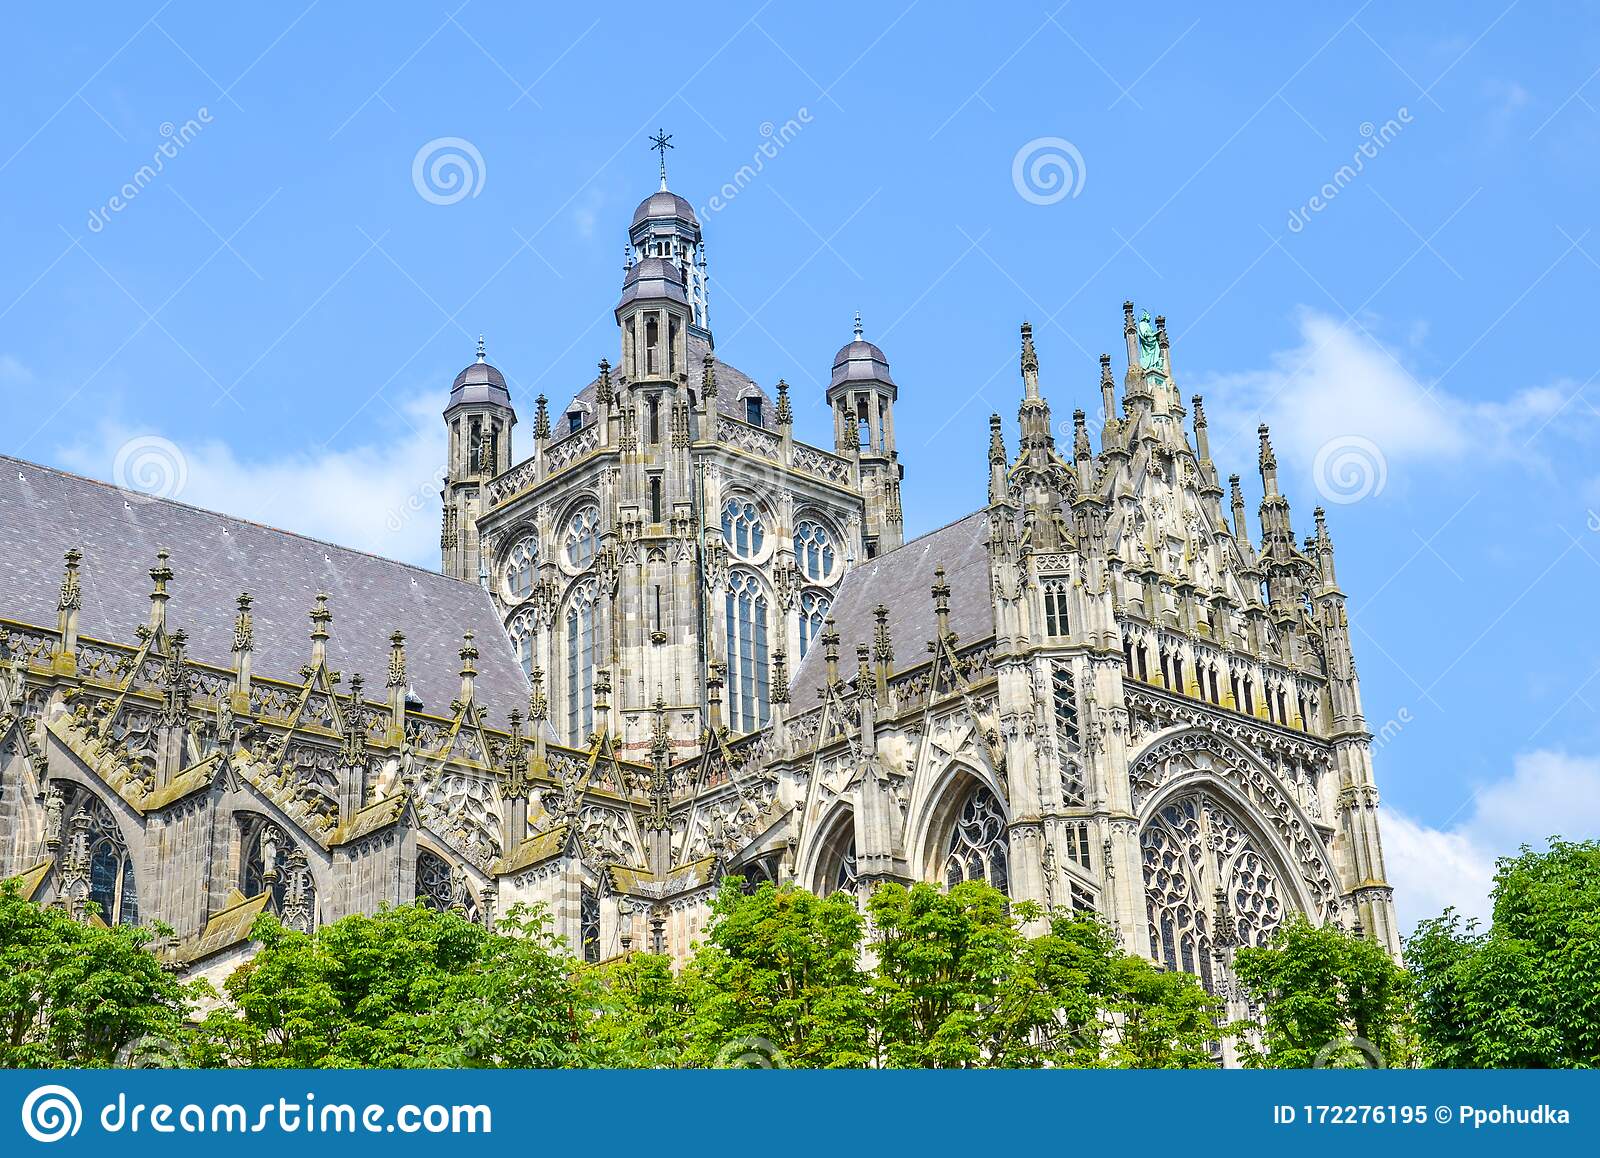 Gothic Churches - Best Tourist Attractions in Netherlands